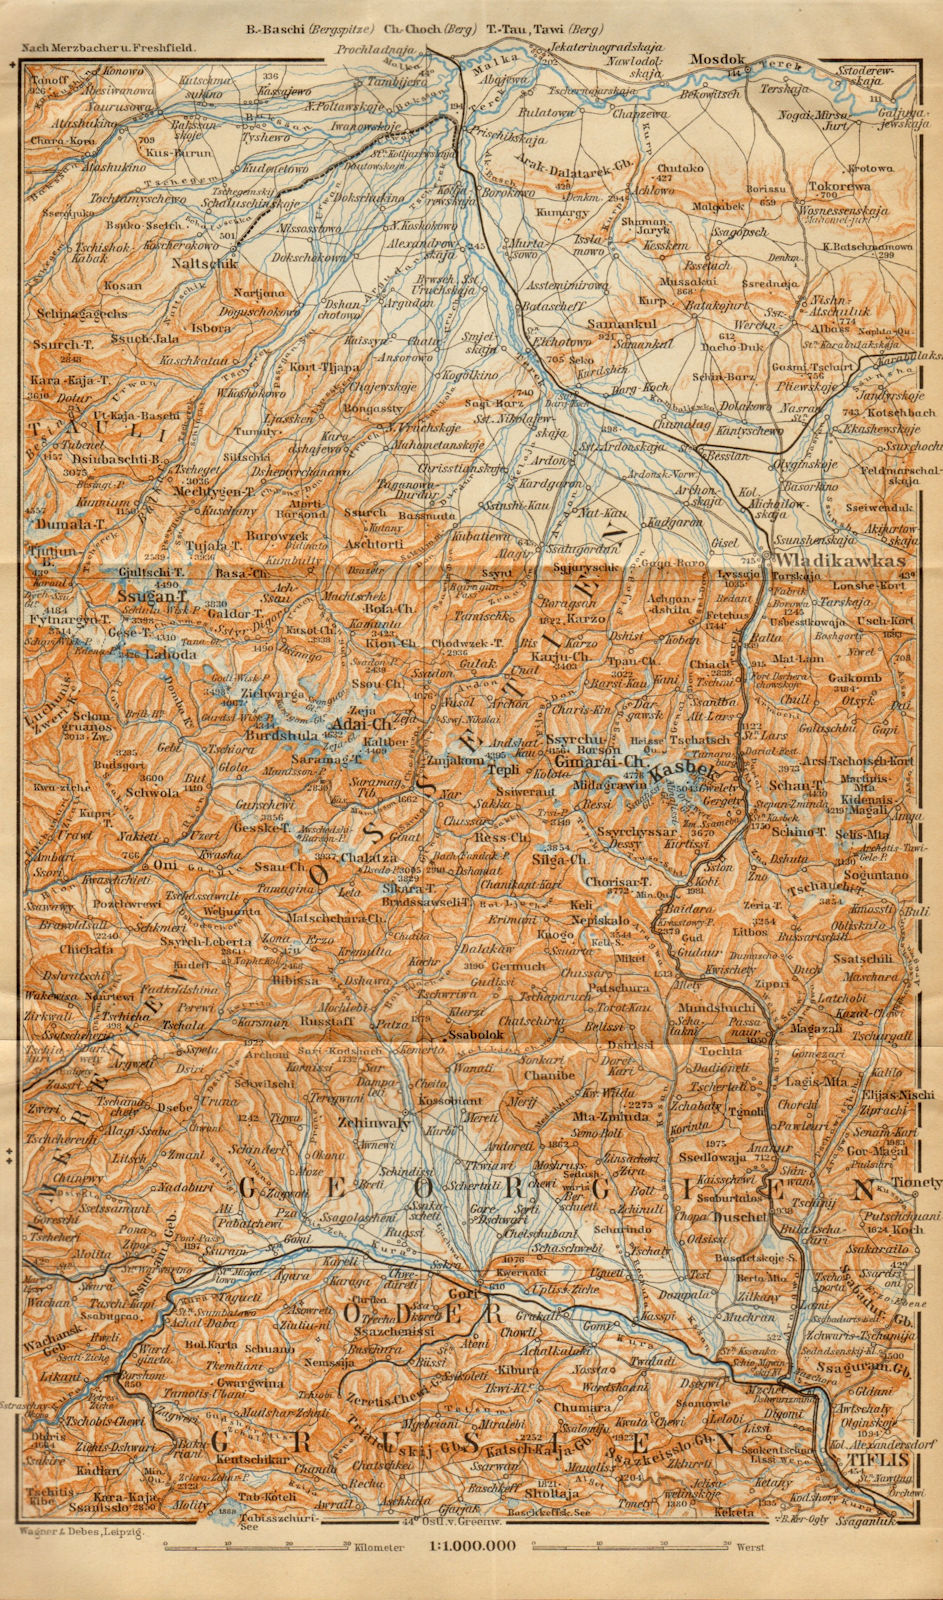 Associate Product Central Caucasus, eastern part. Ossetia & Georgia. BAEDEKER 1912 old map